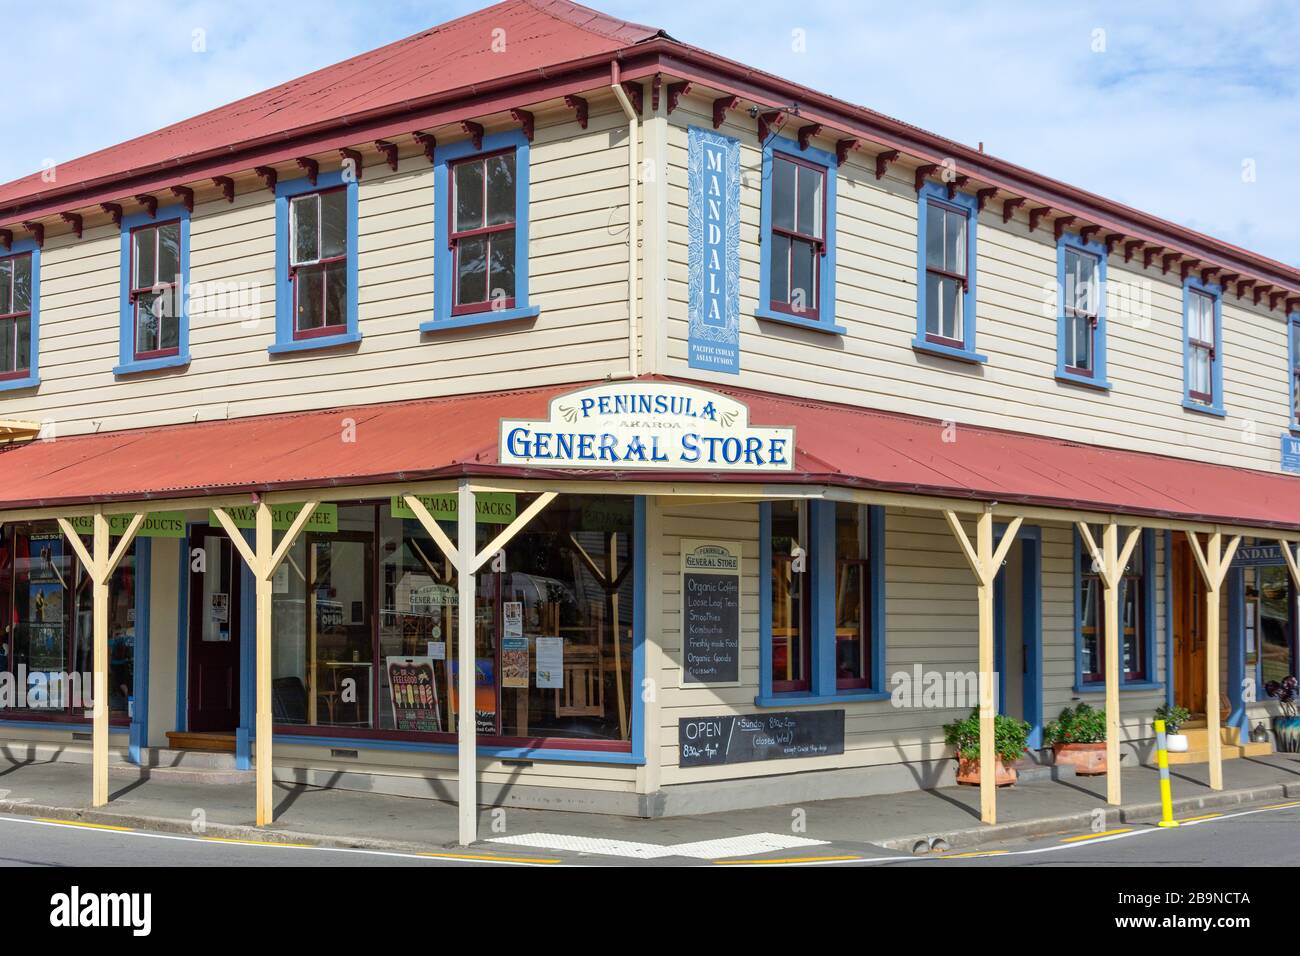 Akaroa Peninsula General Store, rue Lavaud, Akaroa, Banks Peninsula, Canterbury Region, Nouvelle-Zélande Banque D'Images